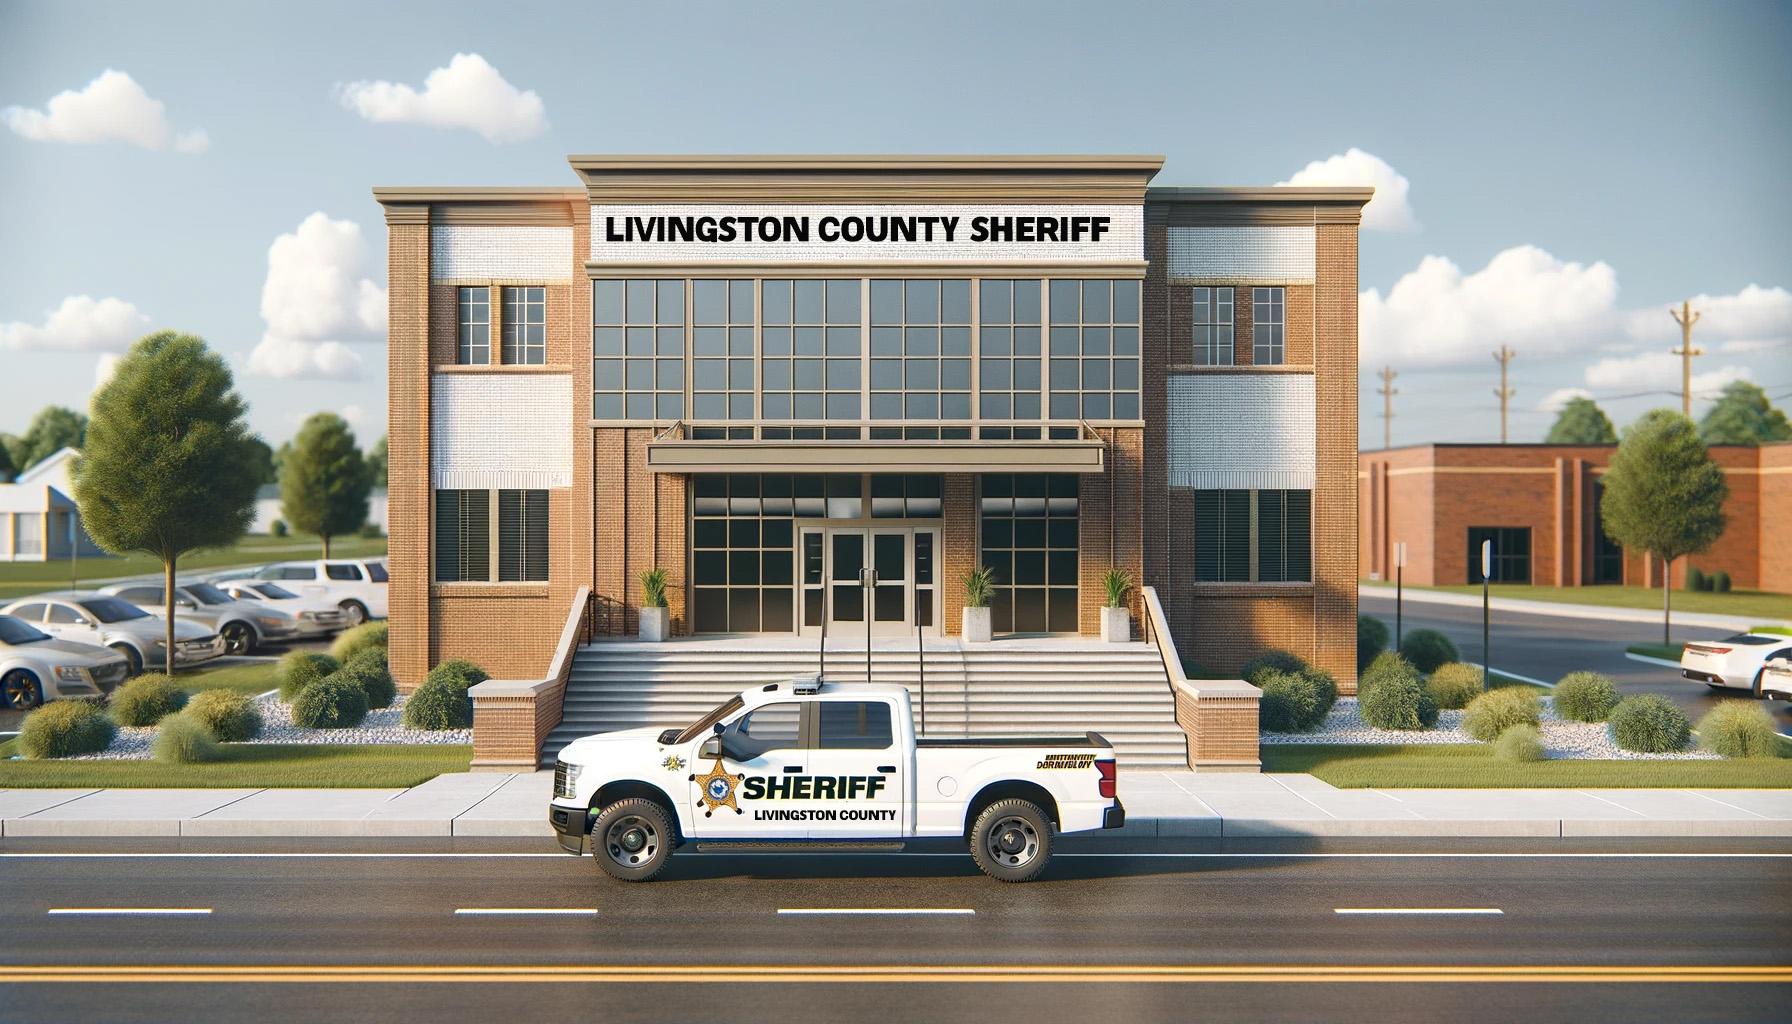 Livingston County Sheriff's Department